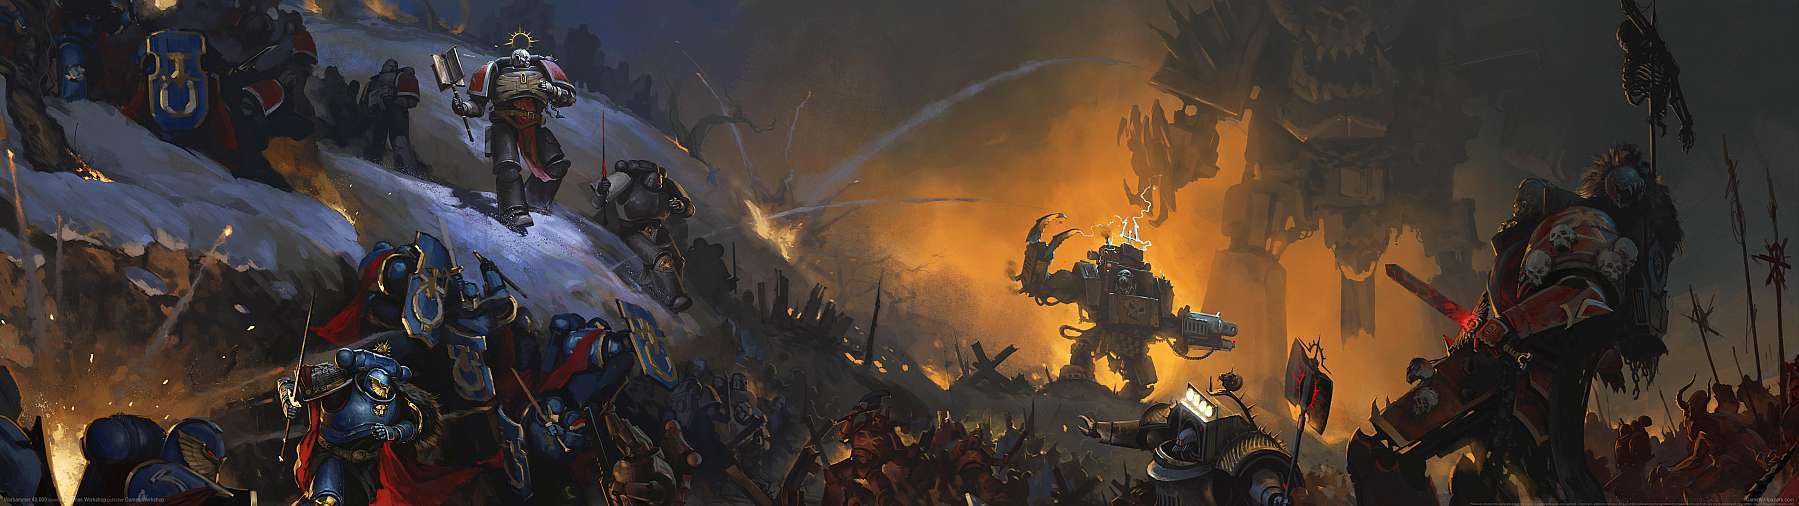 Warhammer 40,000 superwide wallpaper or background 09